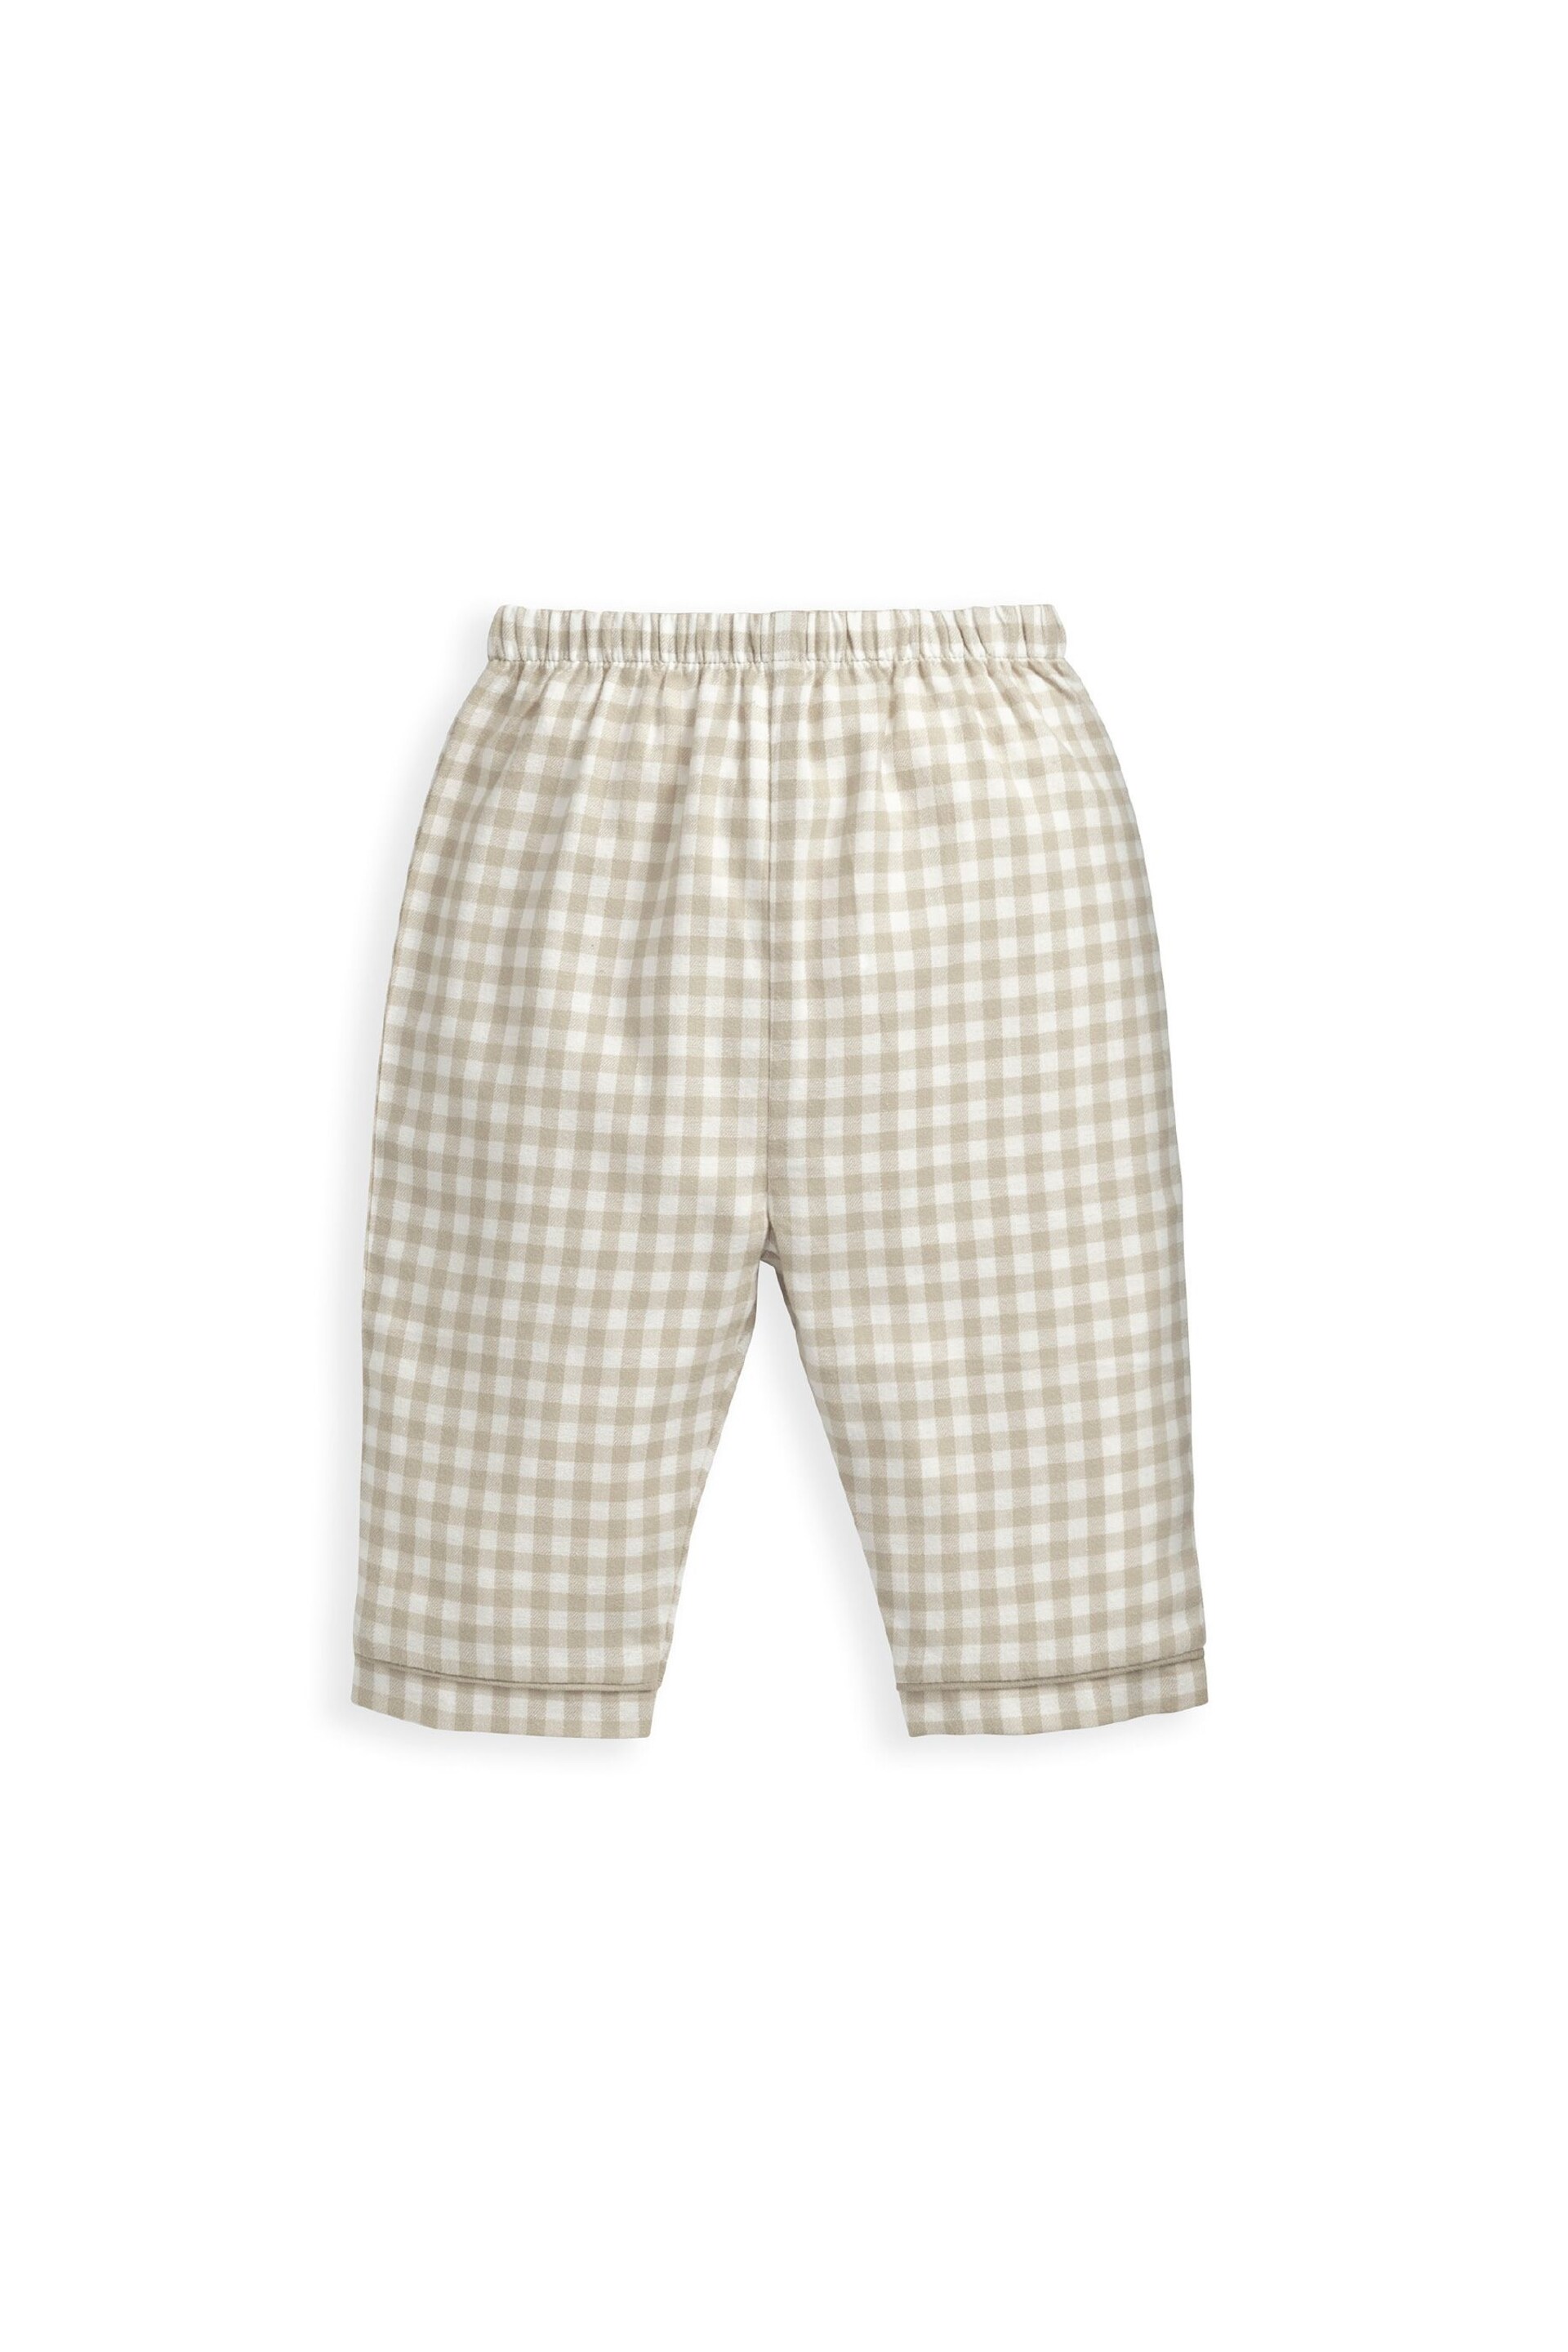 Mamas & Papas Sand Check Woven Brown Pyjamas - Image 4 of 4